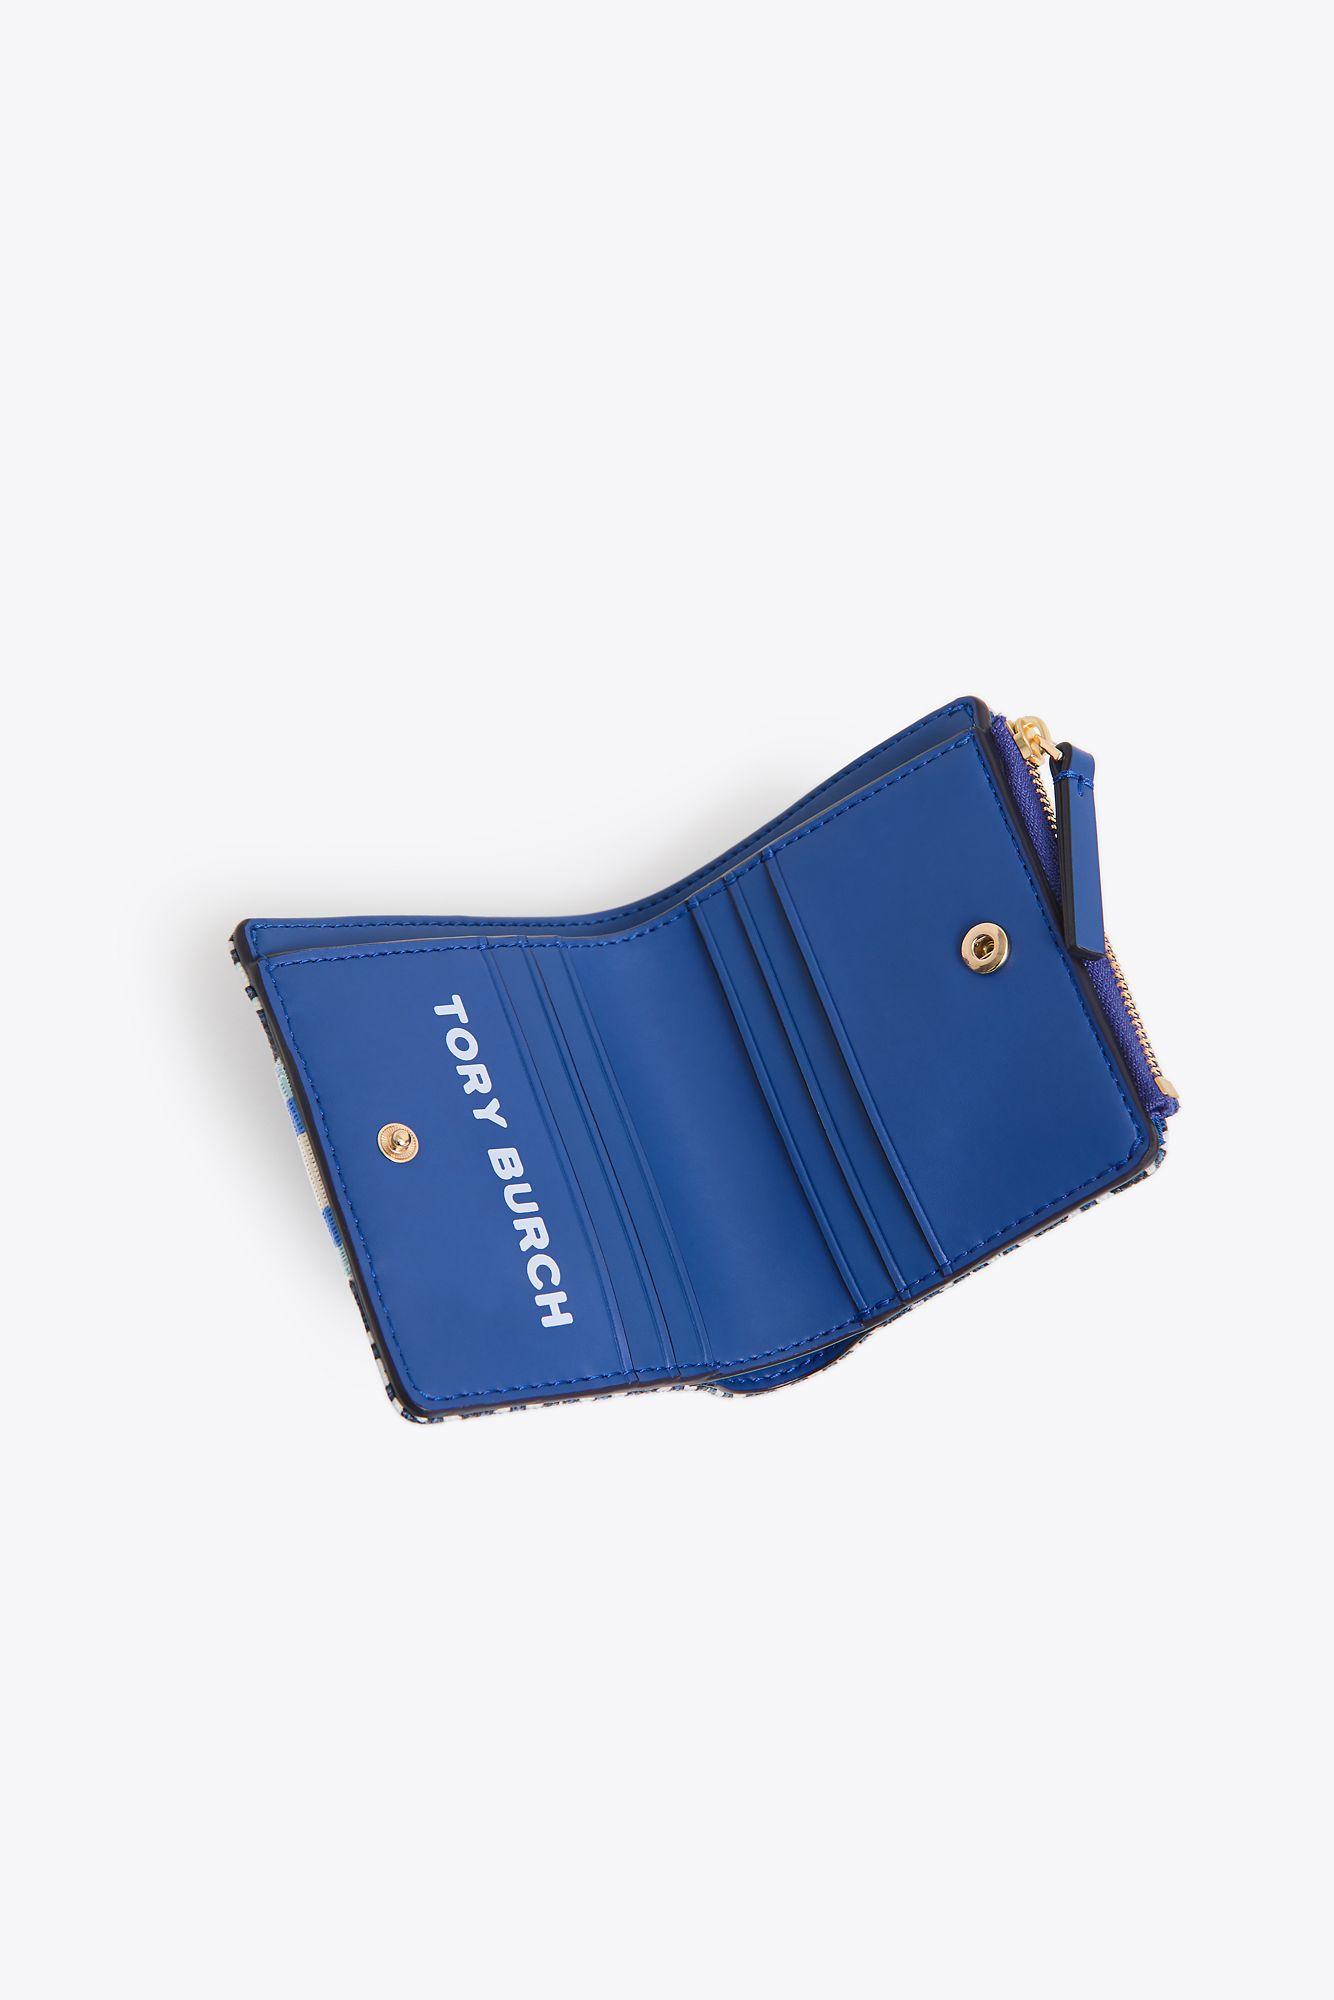 Tory Burch Mini Gemini Link Canvas Wallet in Blue - Lyst